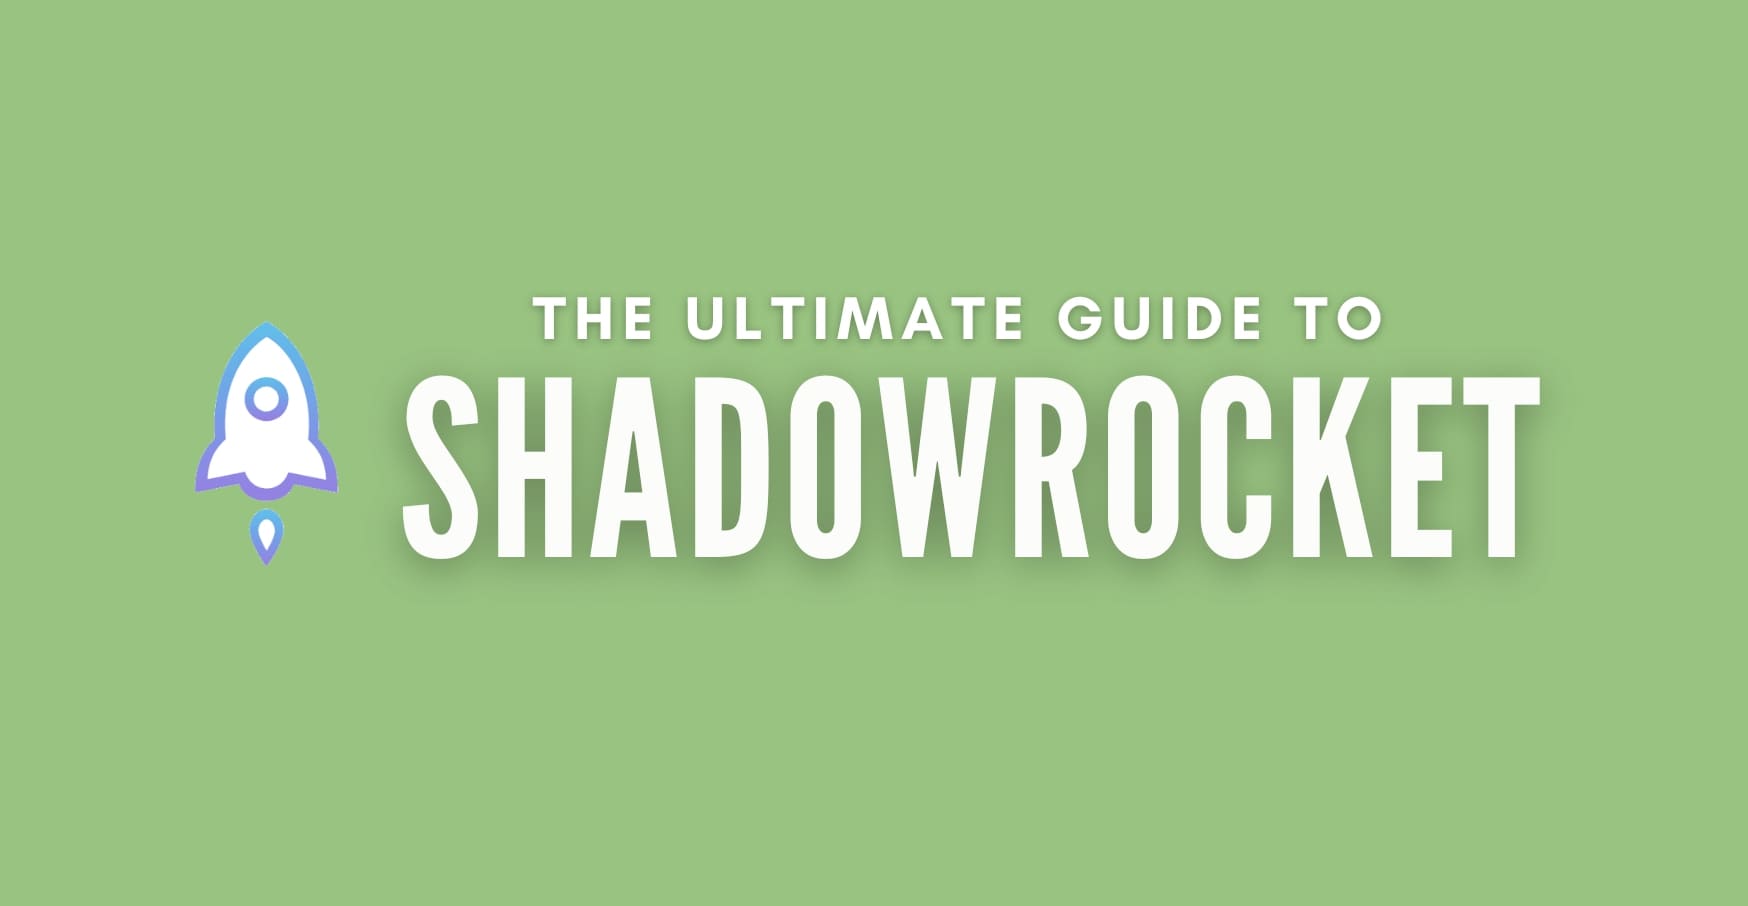 Shadowrocket the ultimate guide